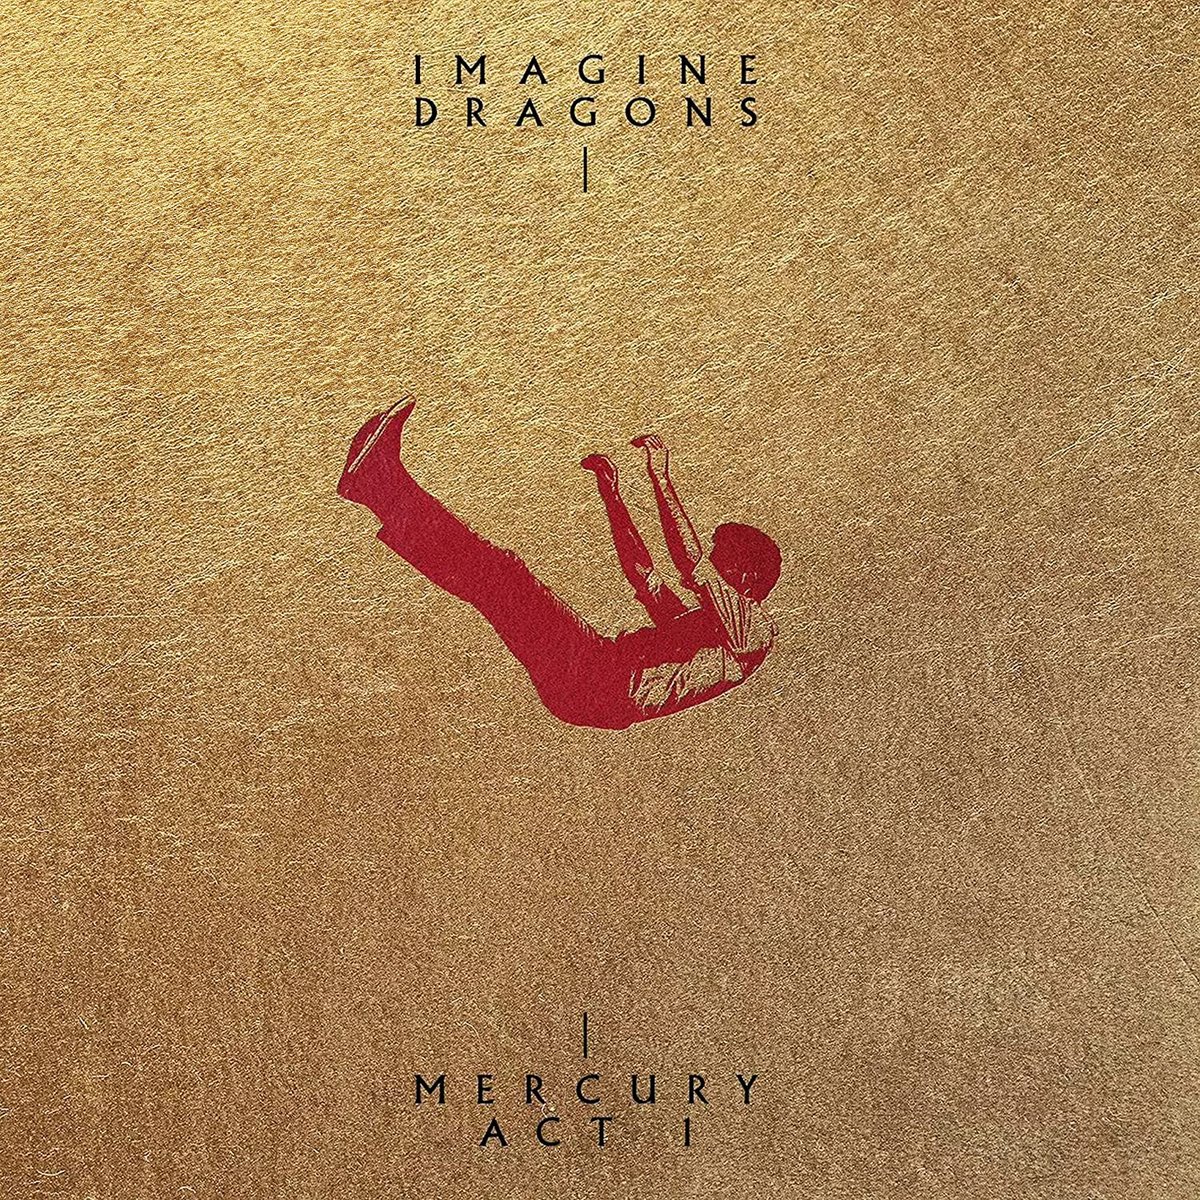 First imagine. Imagine Dragons - Mercury - Act 1 (2021). Mercury Act 1 обложка. Imagine Dragons - 2021 Mercury - Act 2. Imagine Dragons Mercury - Acts 1 & 2.